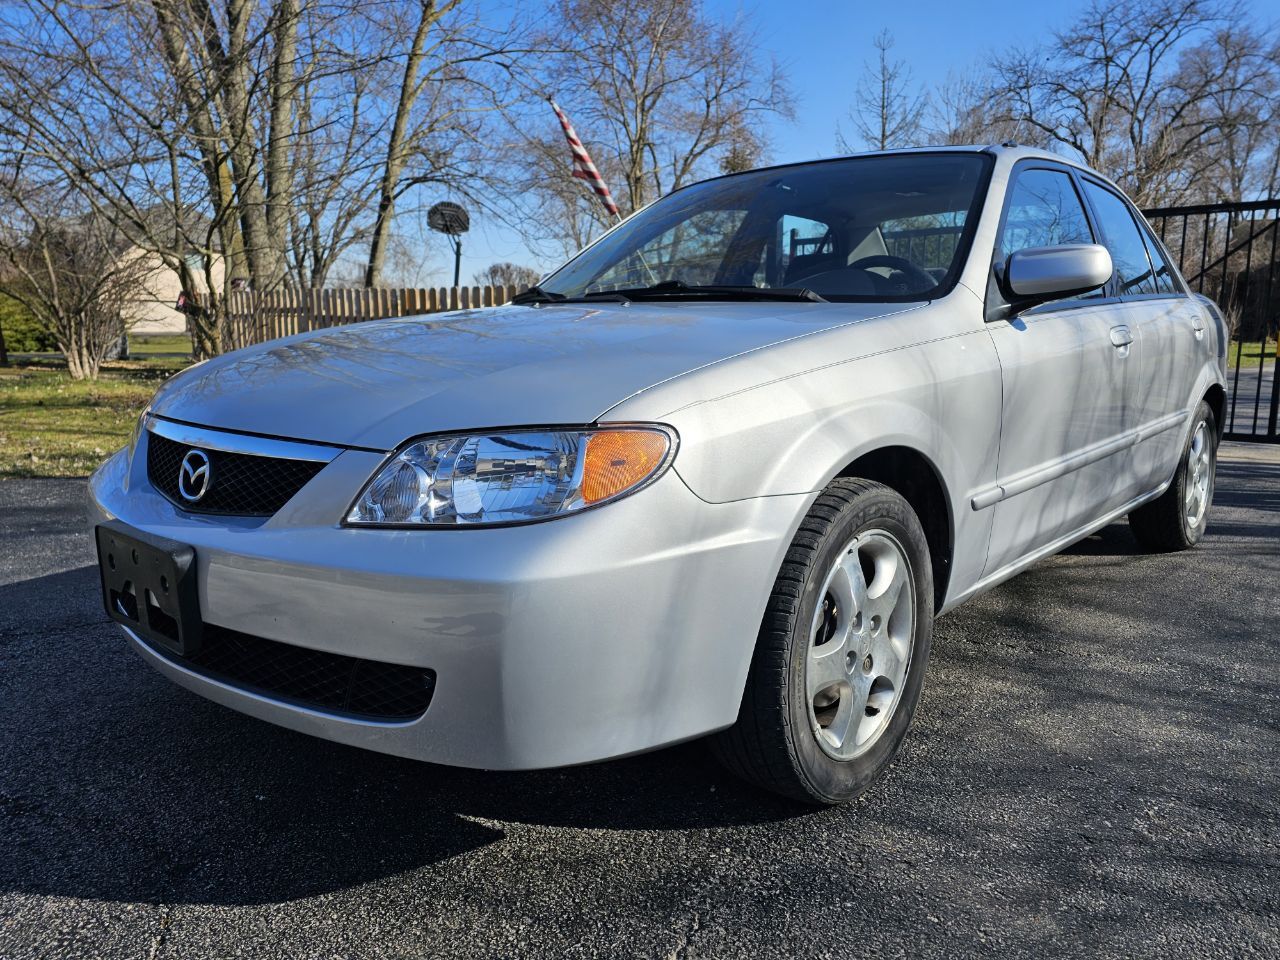 2001 Mazda Protege For Sale - Carsforsale.com®